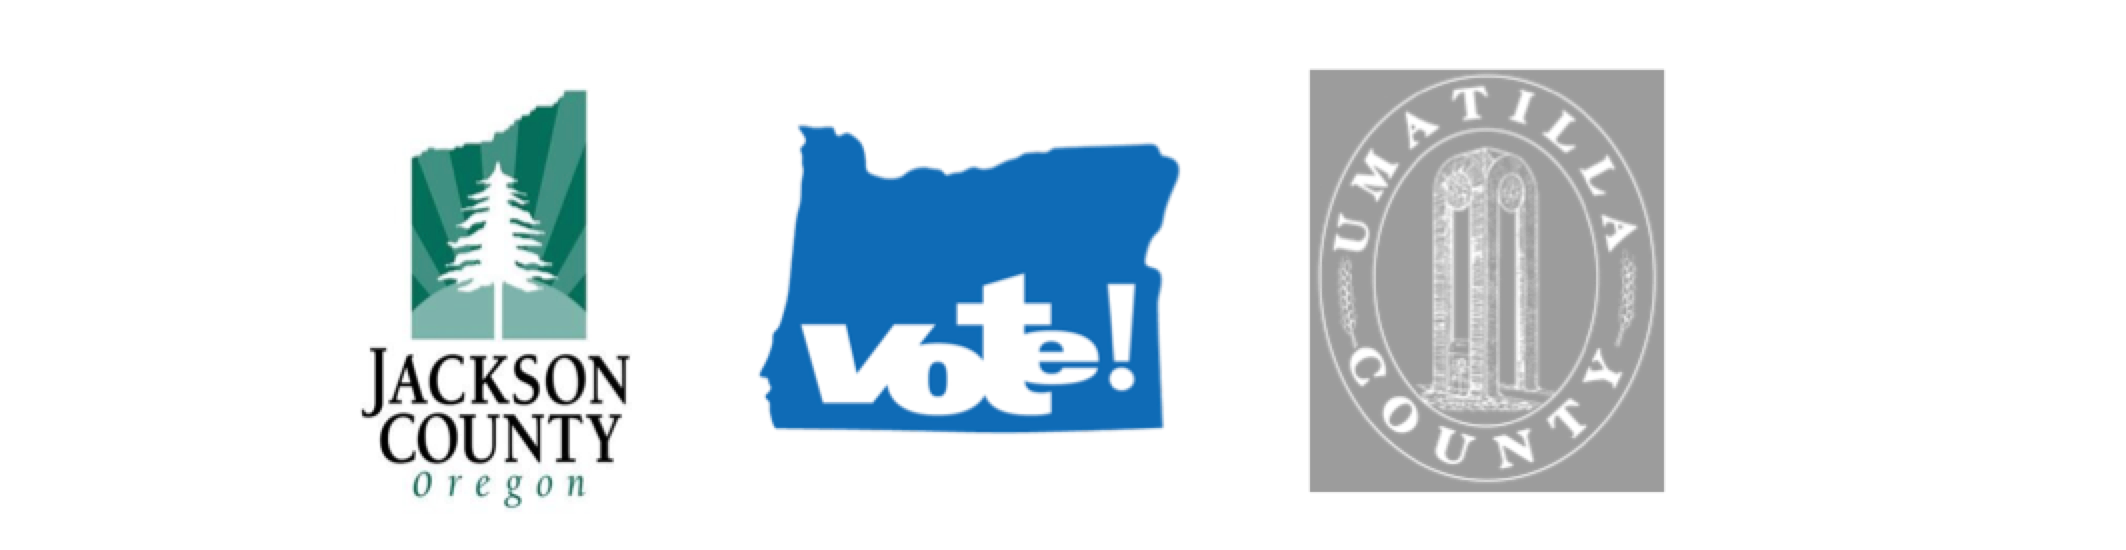 County logos in Oregon